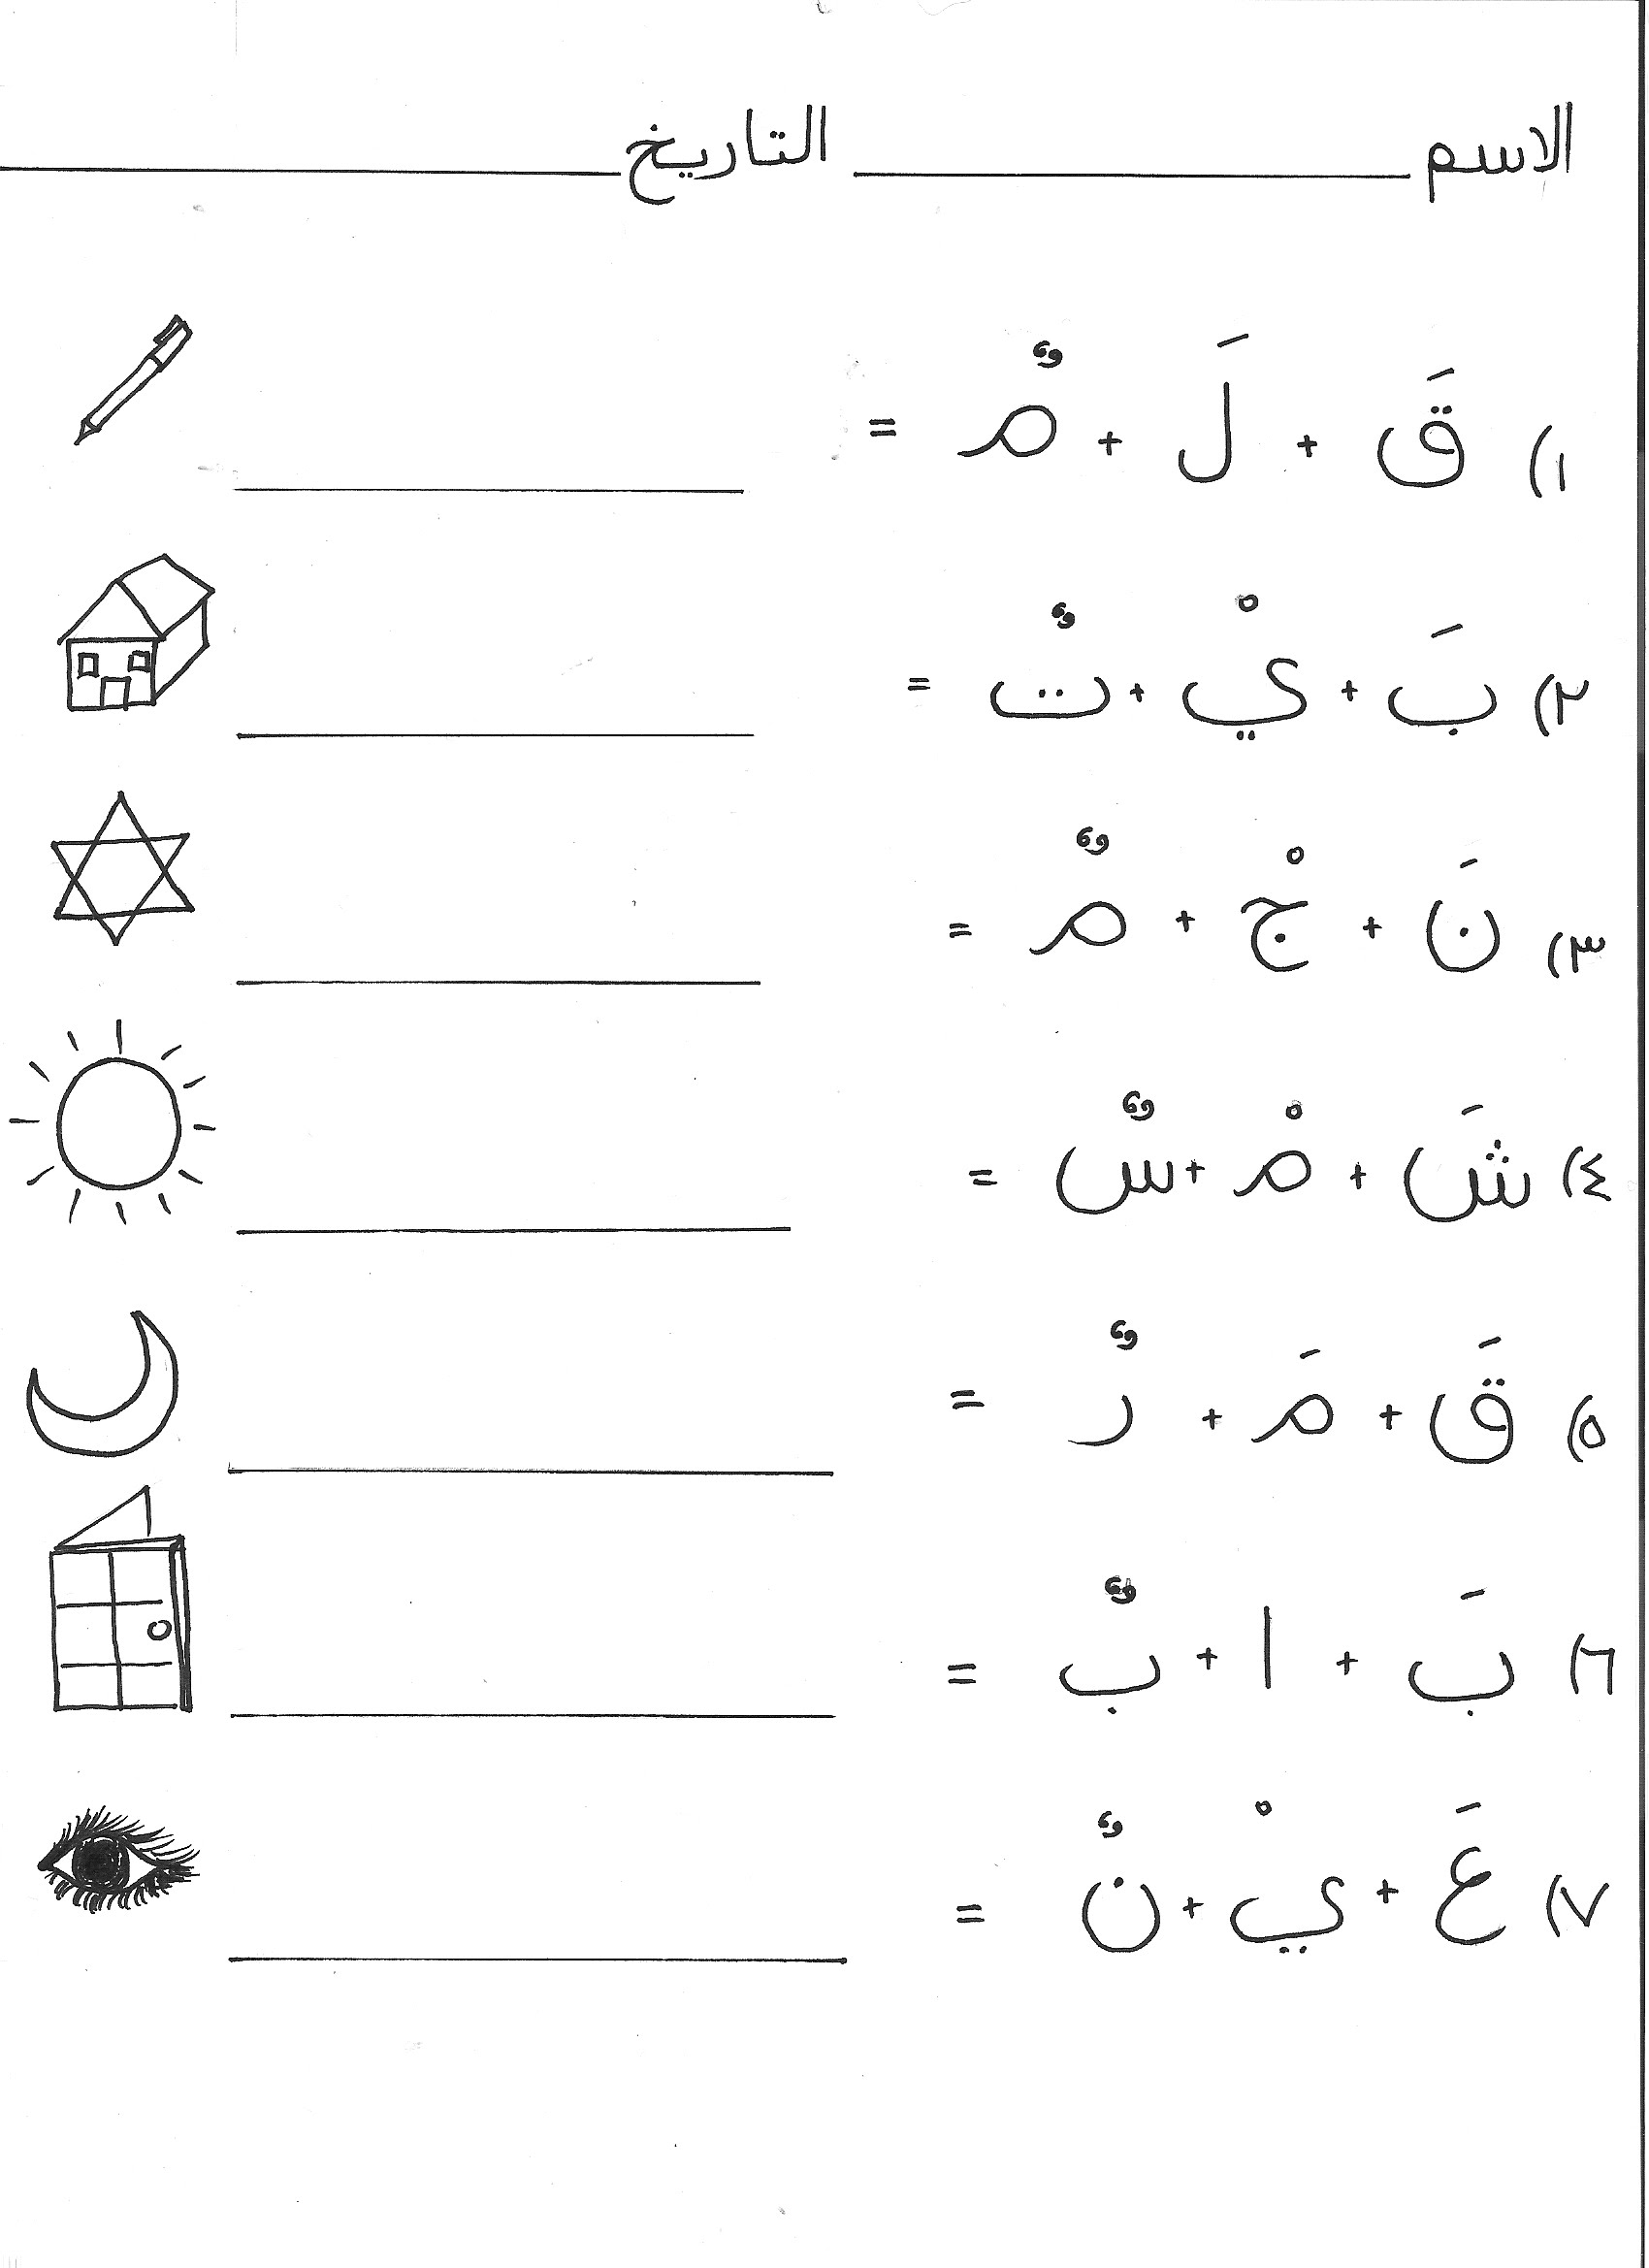 9-best-images-of-arabic-alphabet-writing-worksheets-arabic-alphabet-letters-worksheets-arabic